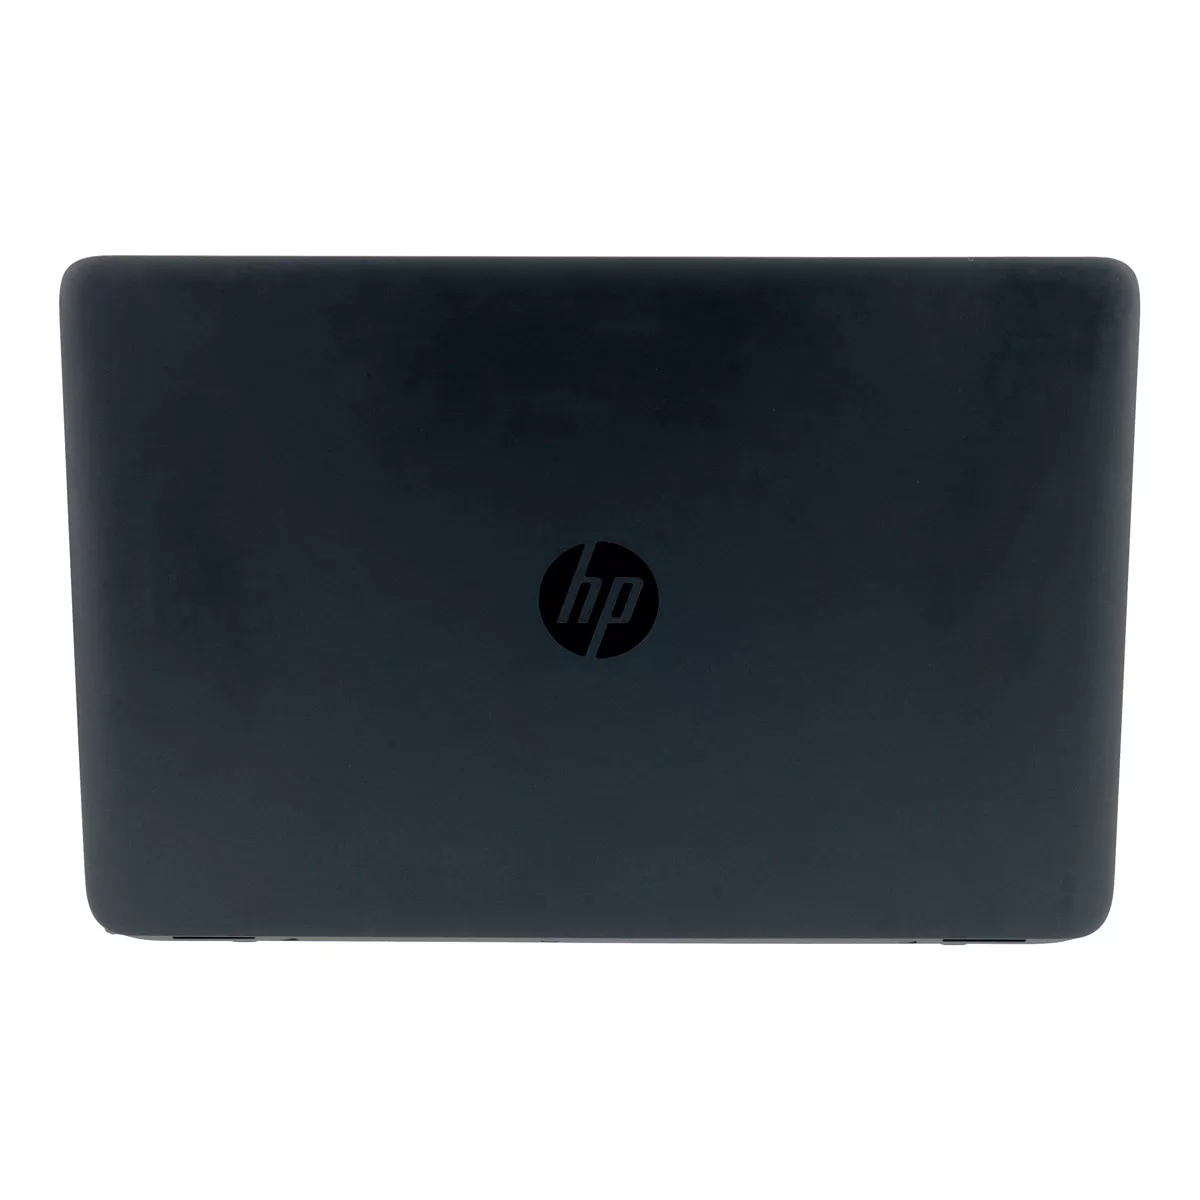 HP EliteBook 850 G2 Core i5 5300U 8 GB 240 GB SSD A